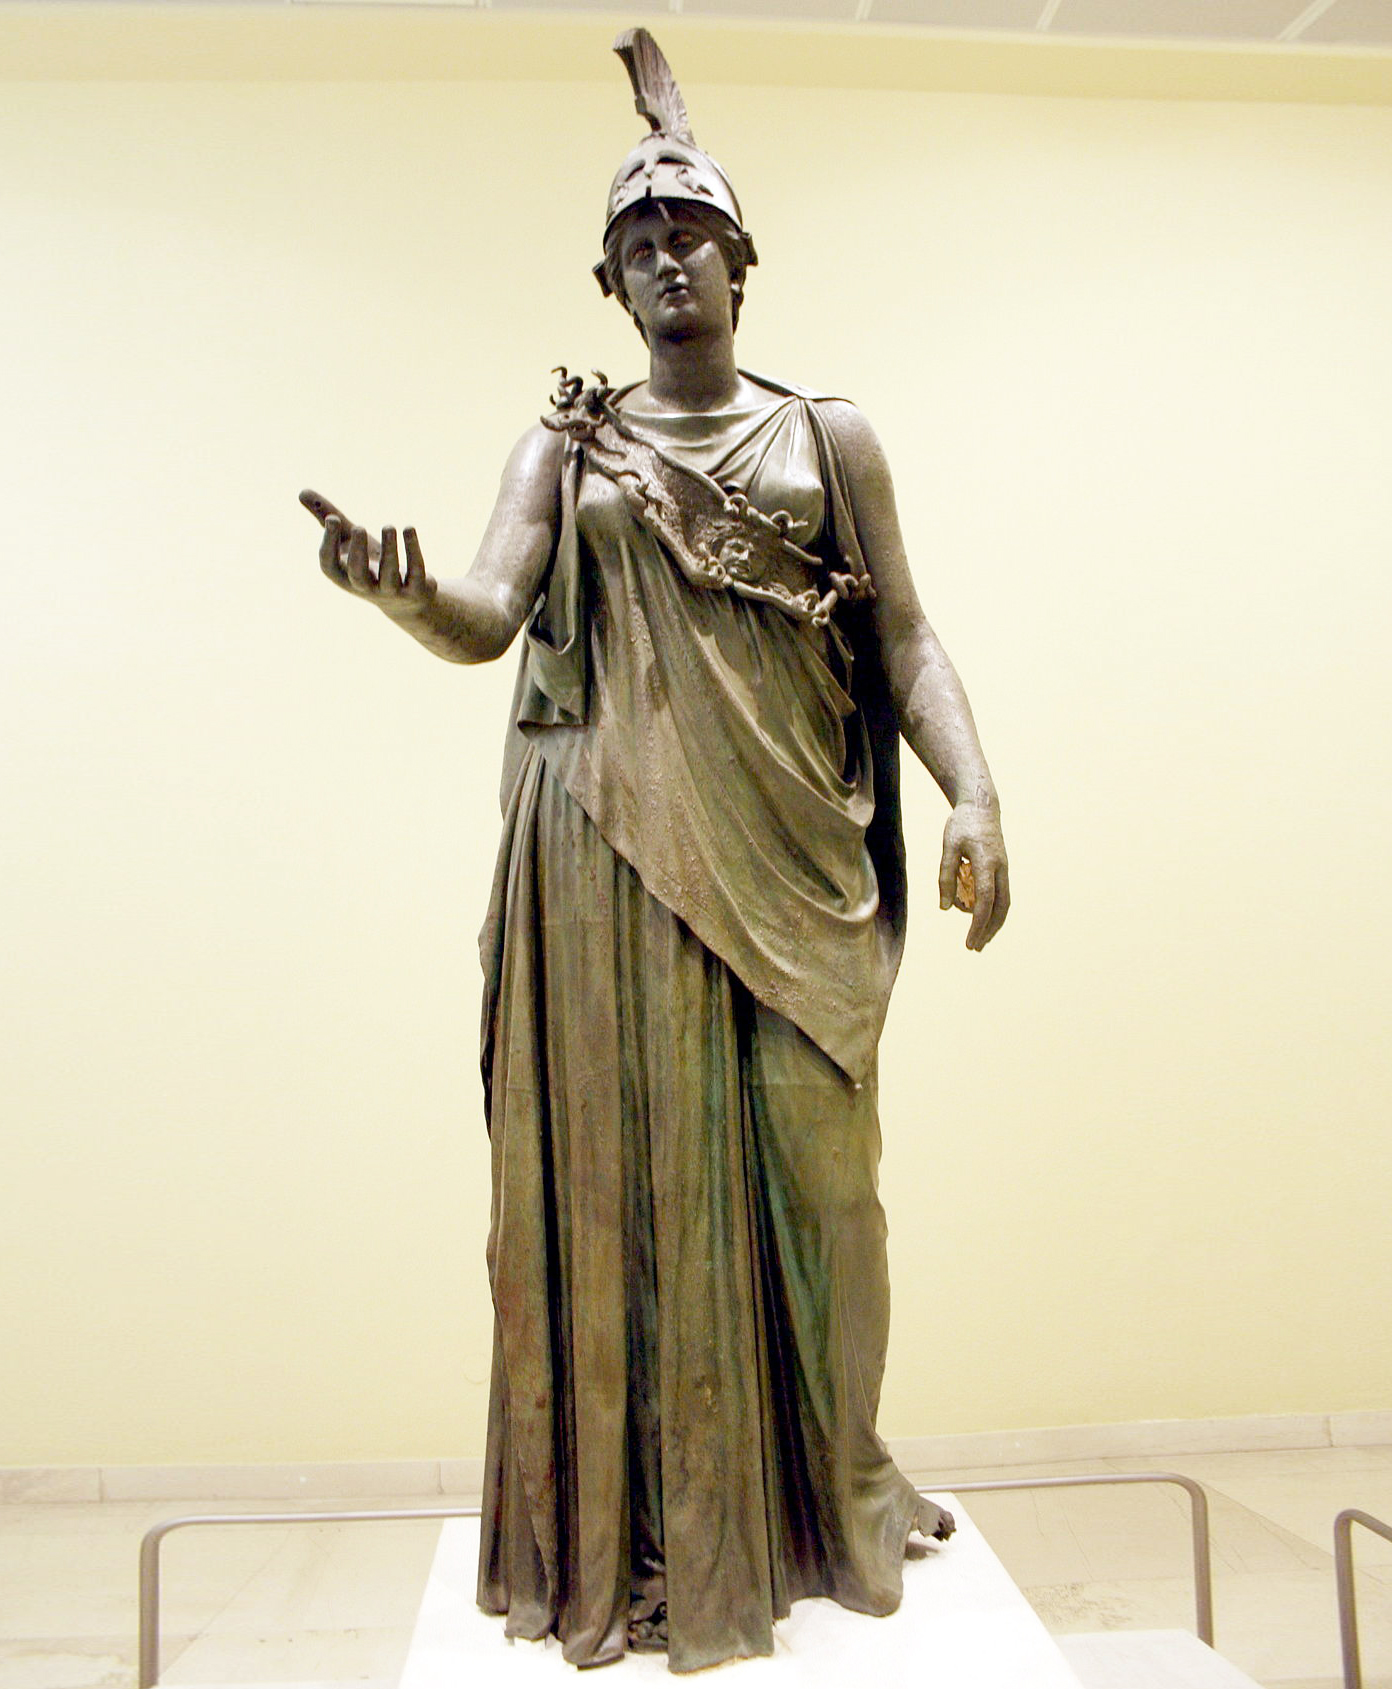 Athena Sculpture